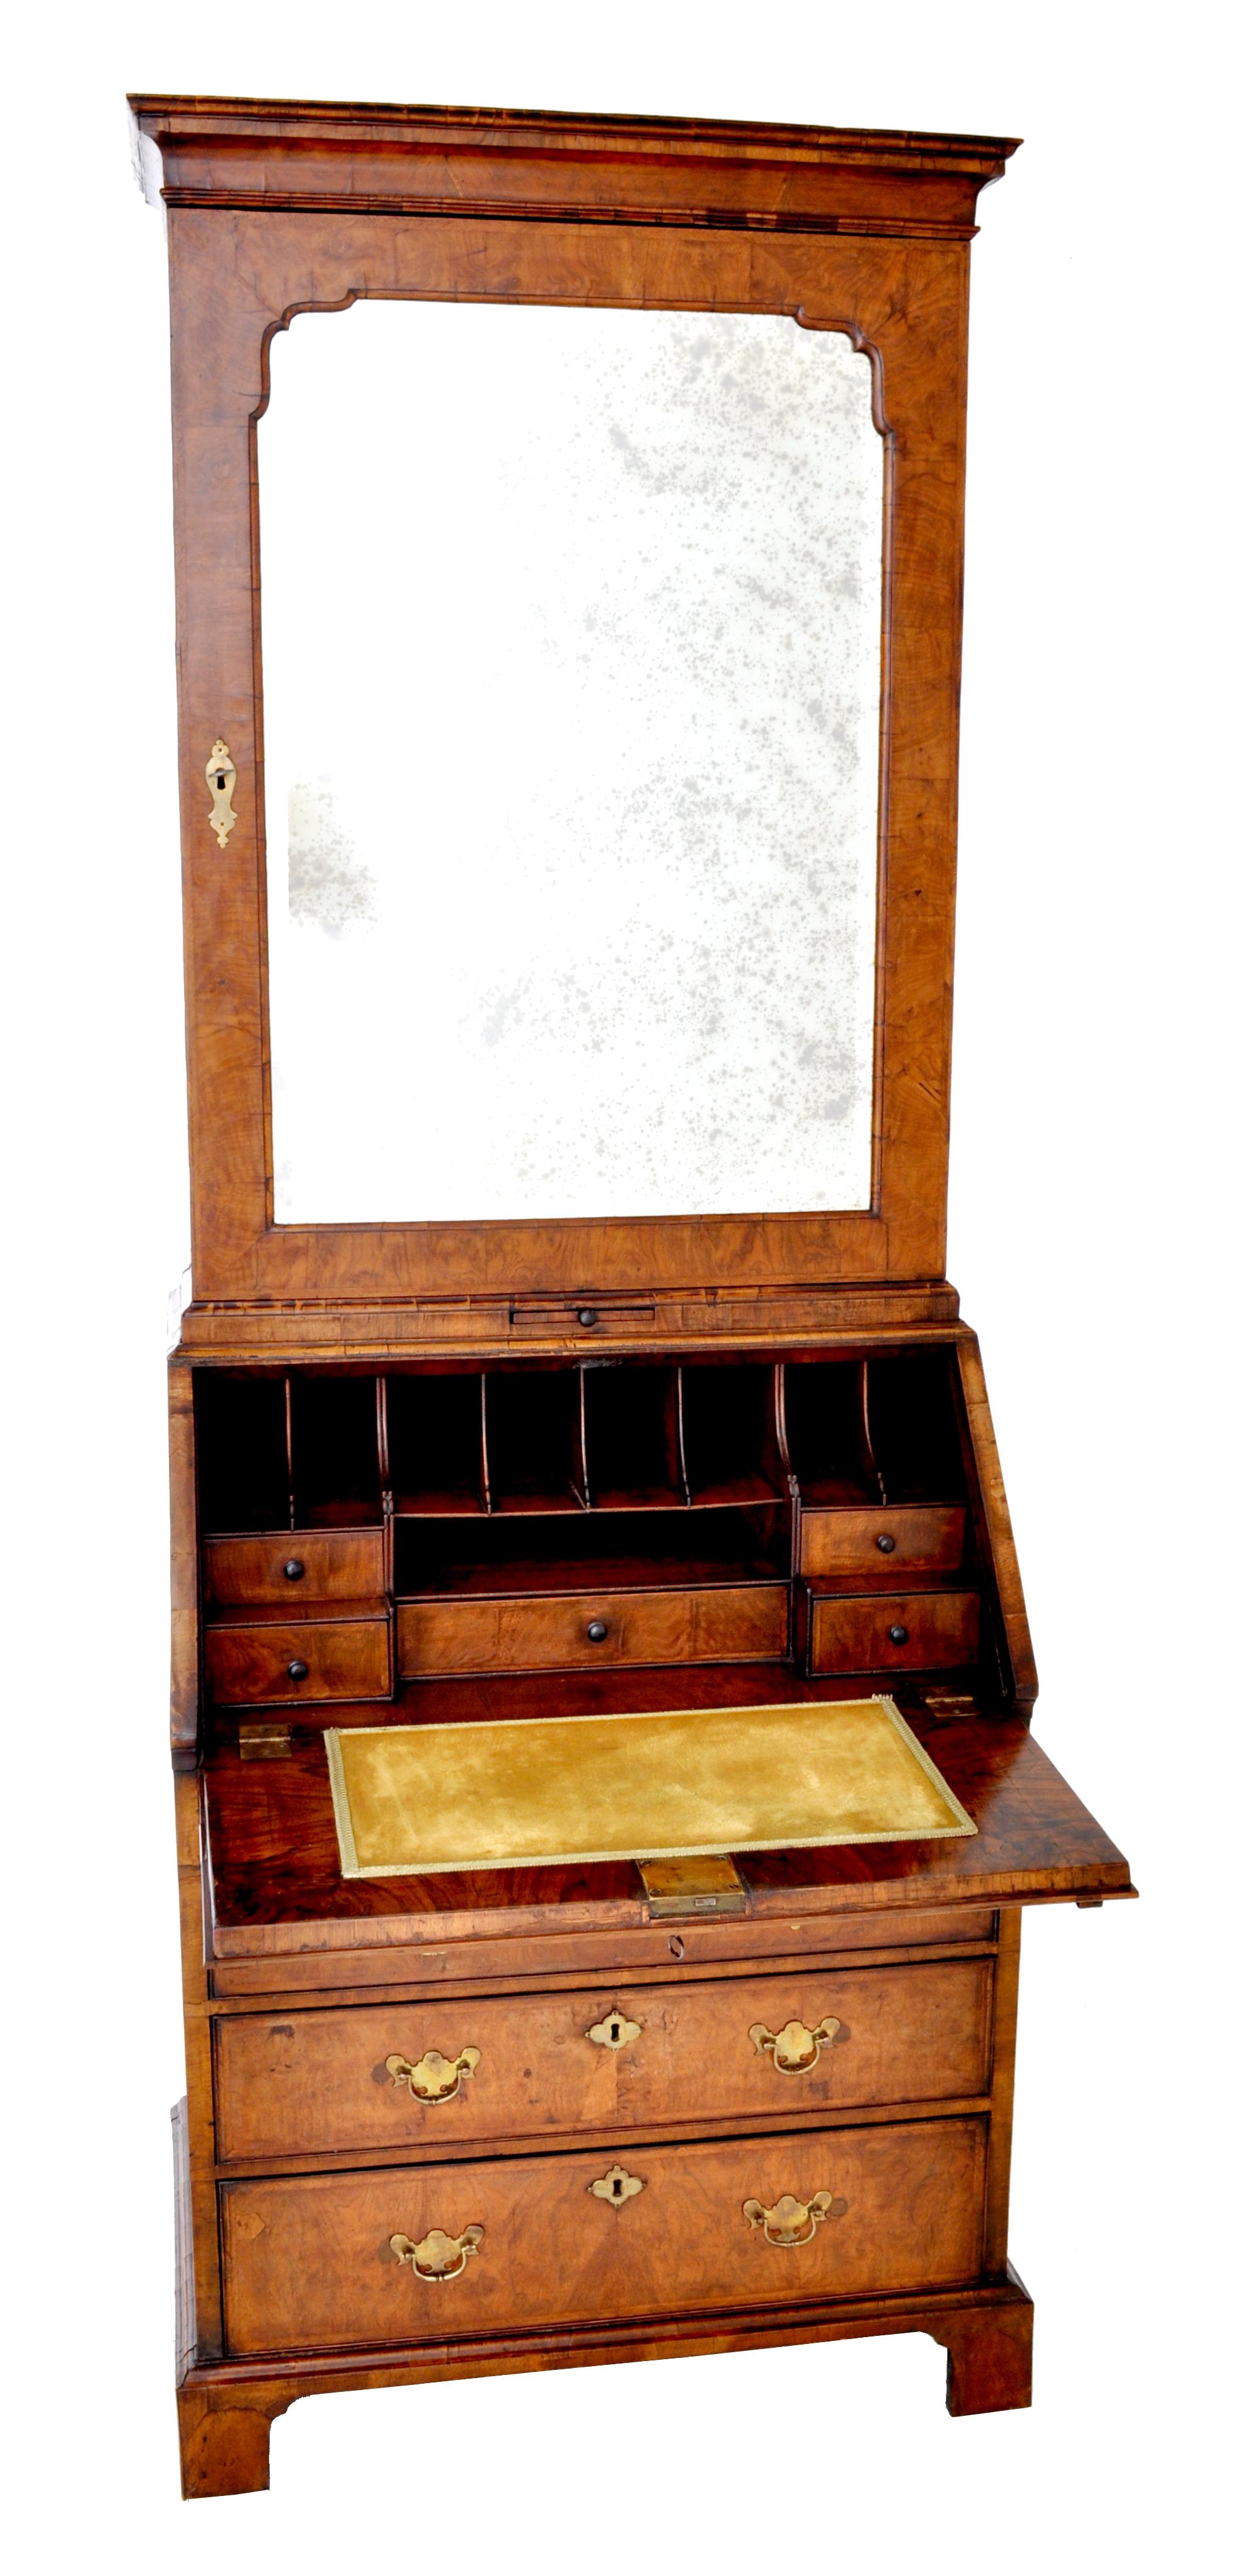 18th Century Antique Queen Anne Burl Walnut Bookcase / Bureau / Secretary Desk, circa 1710